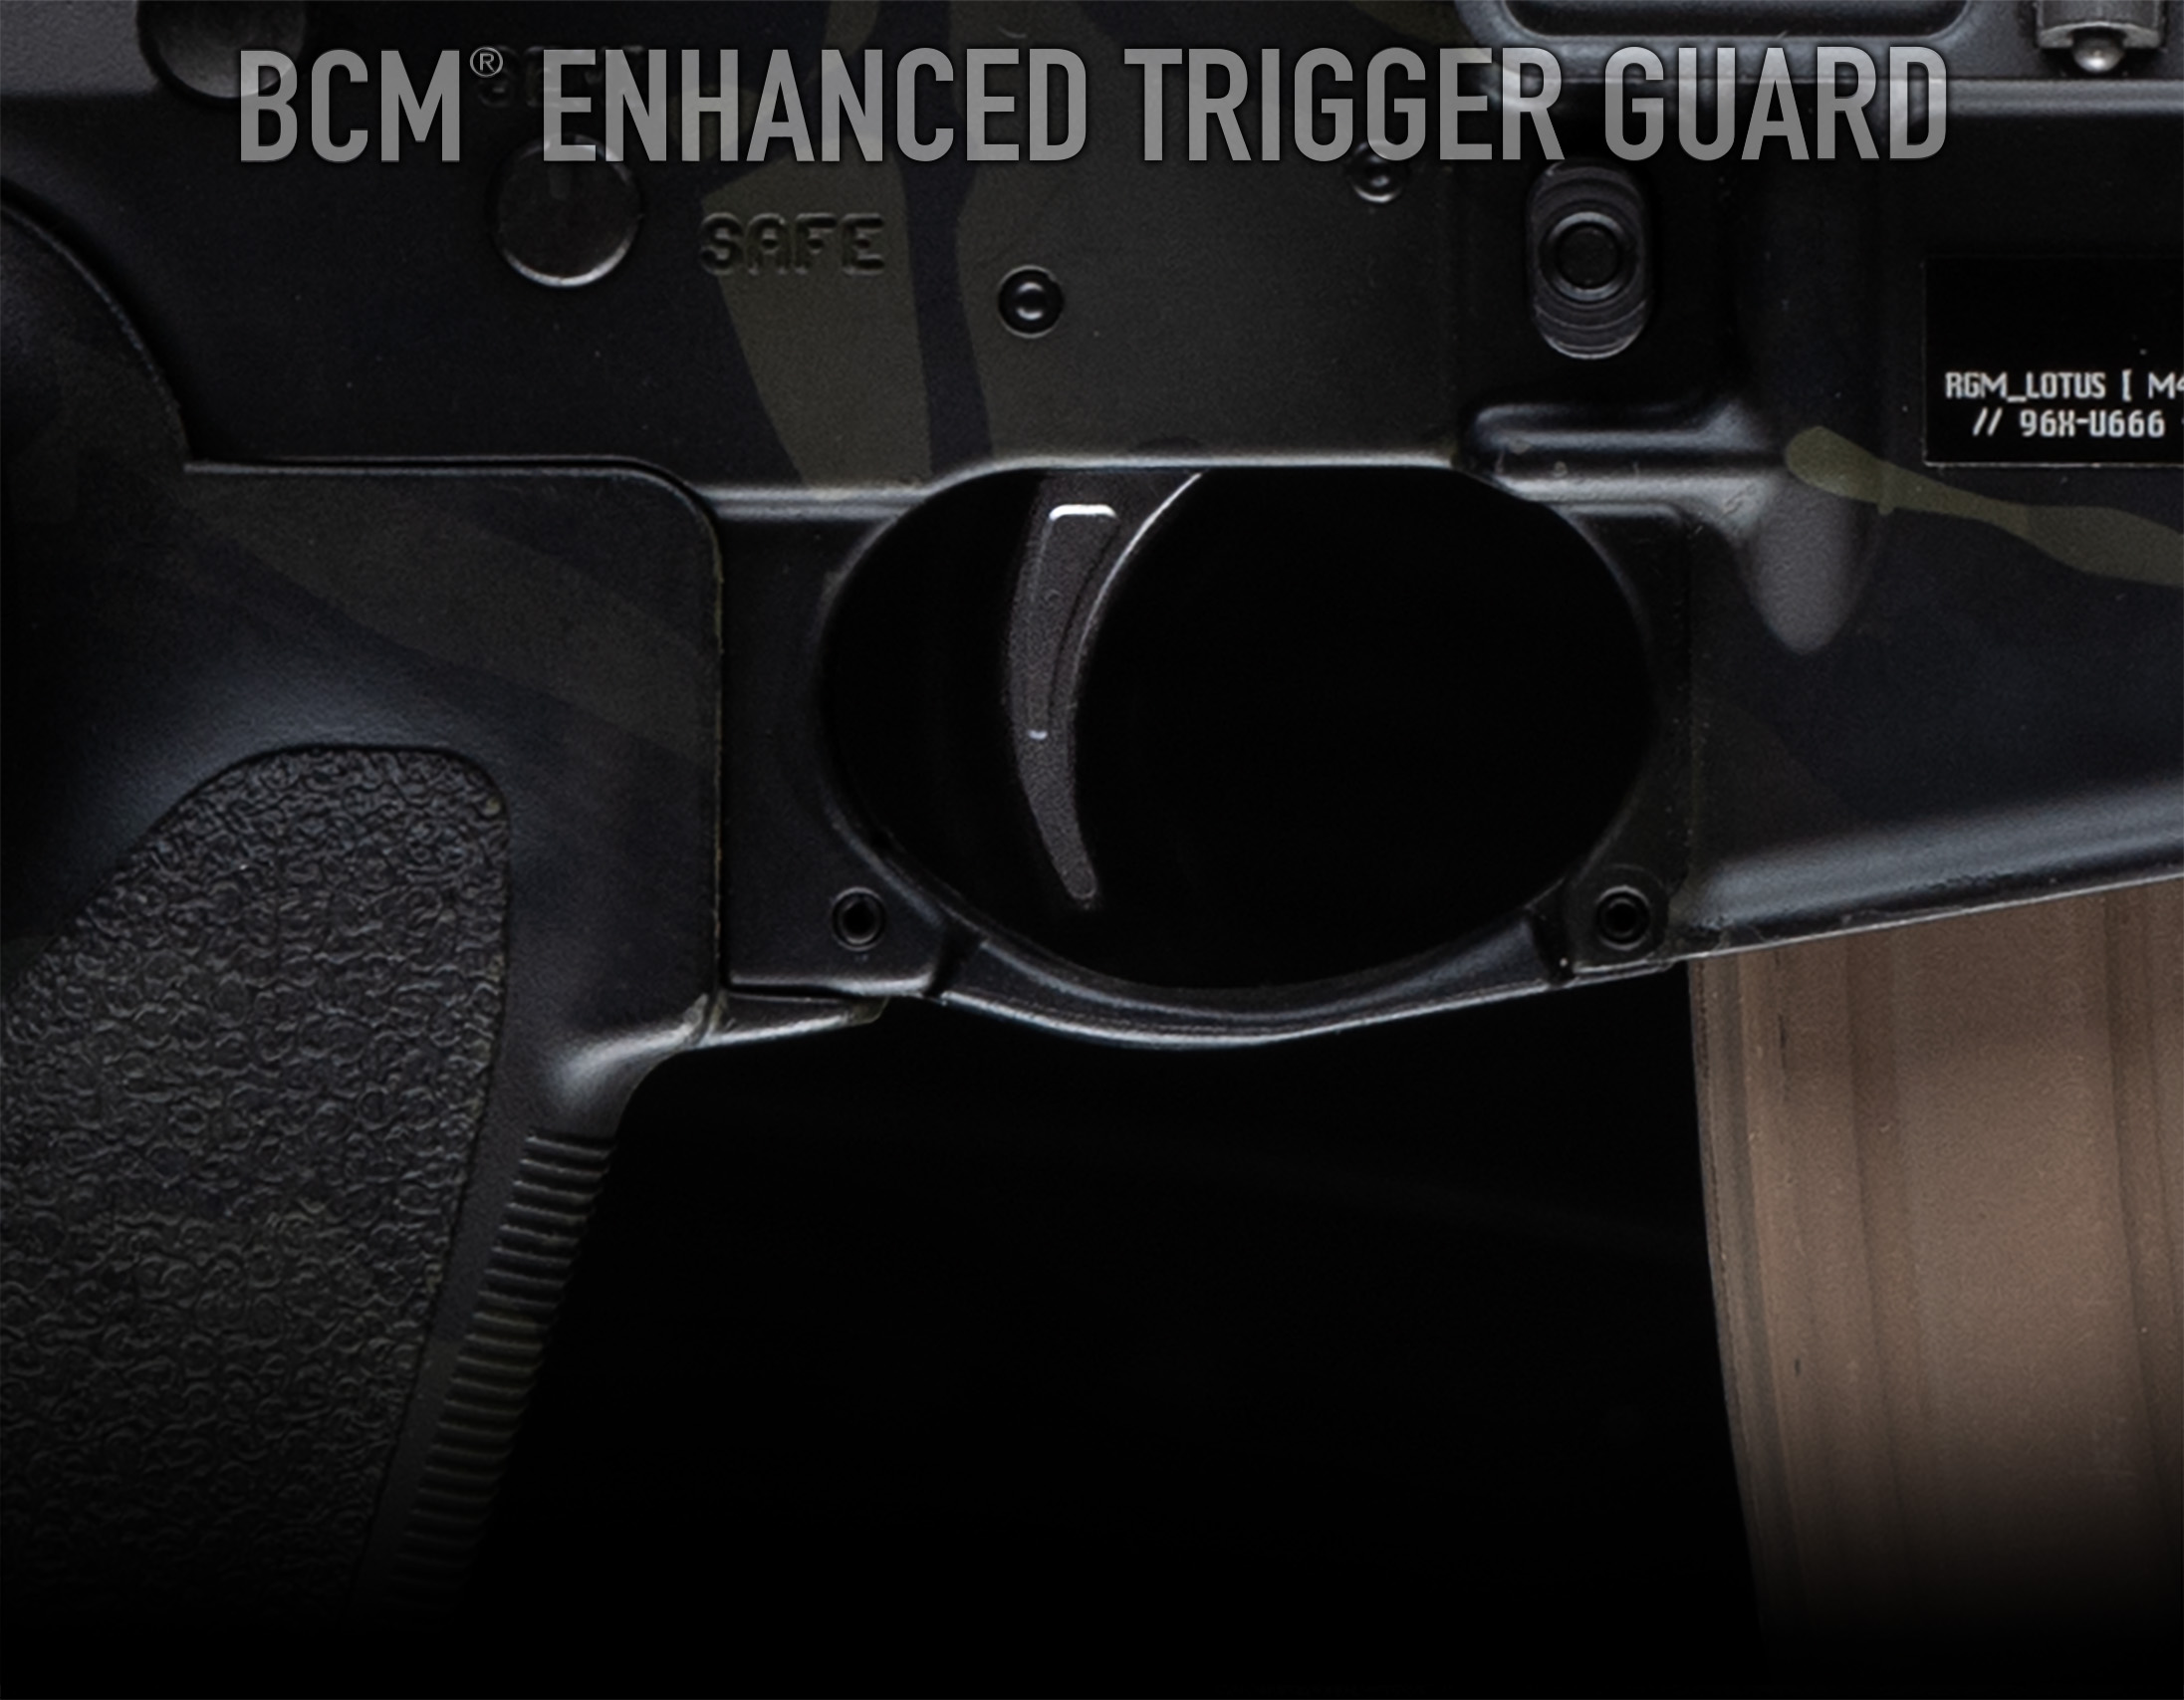 BCM Enhanced Trigger Guard